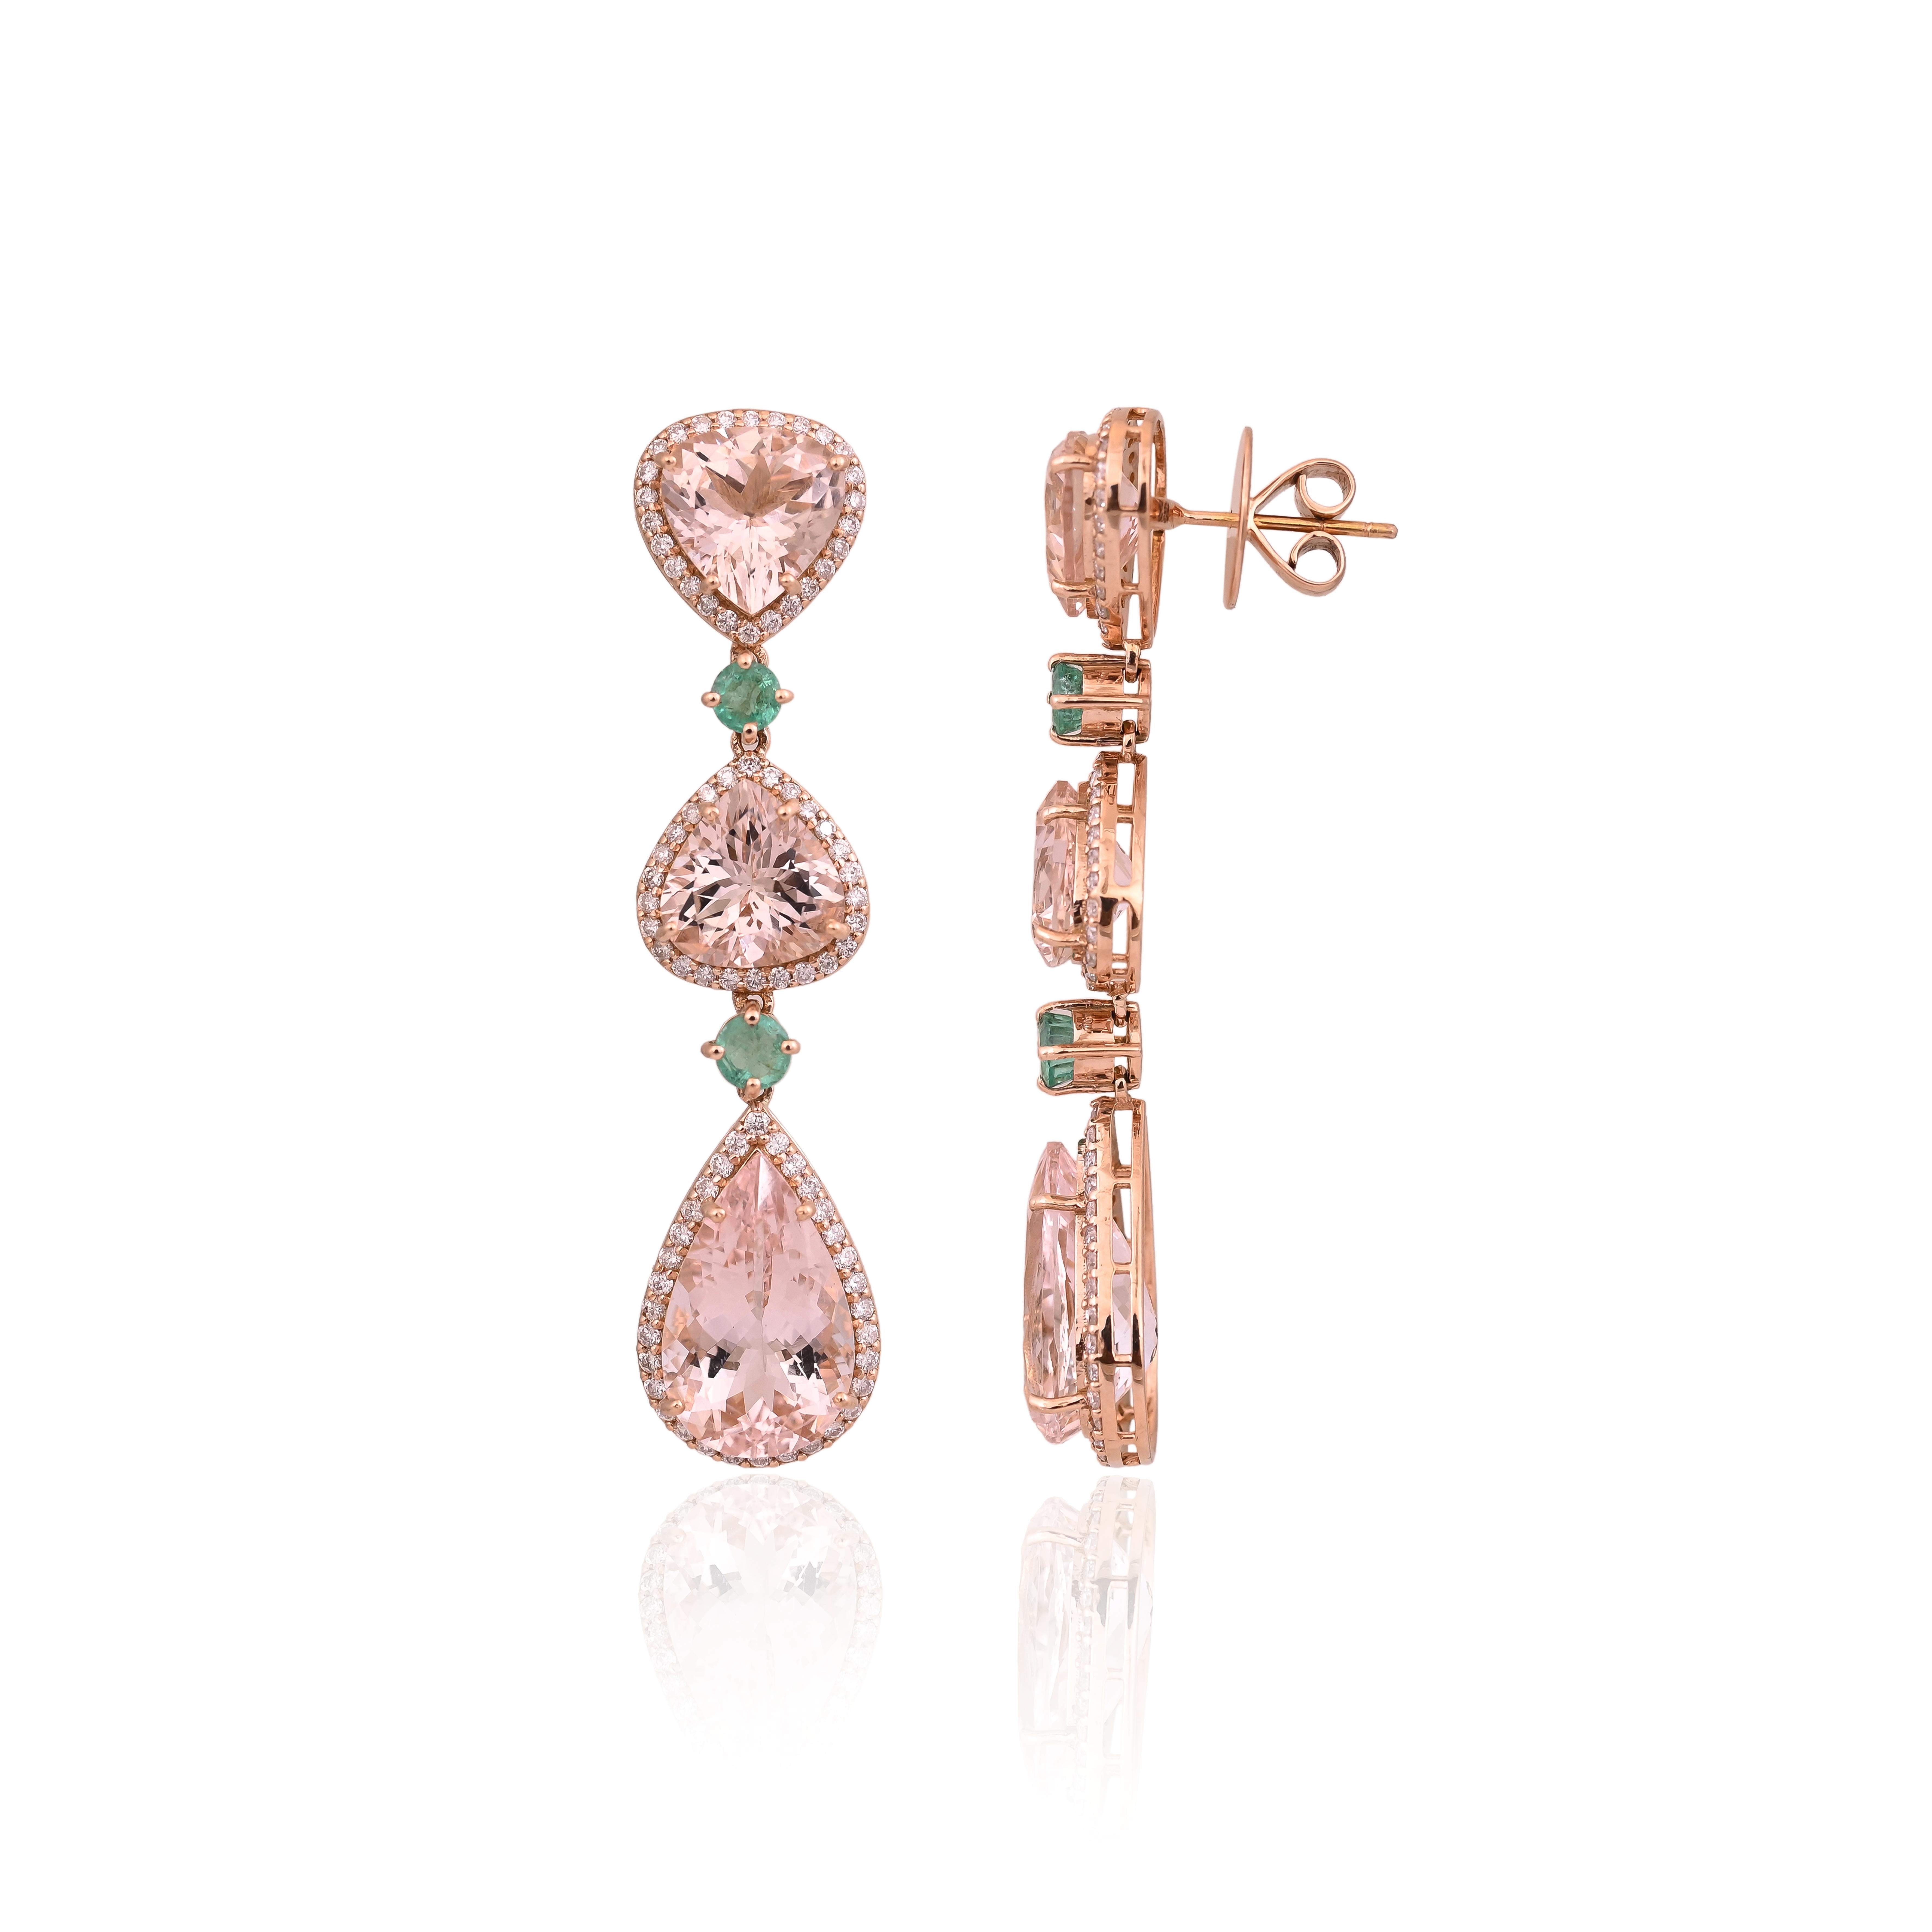 Modern Set in 18K Rose Gold, Morganite, Emerald & Diamonds Chandelier Earrings